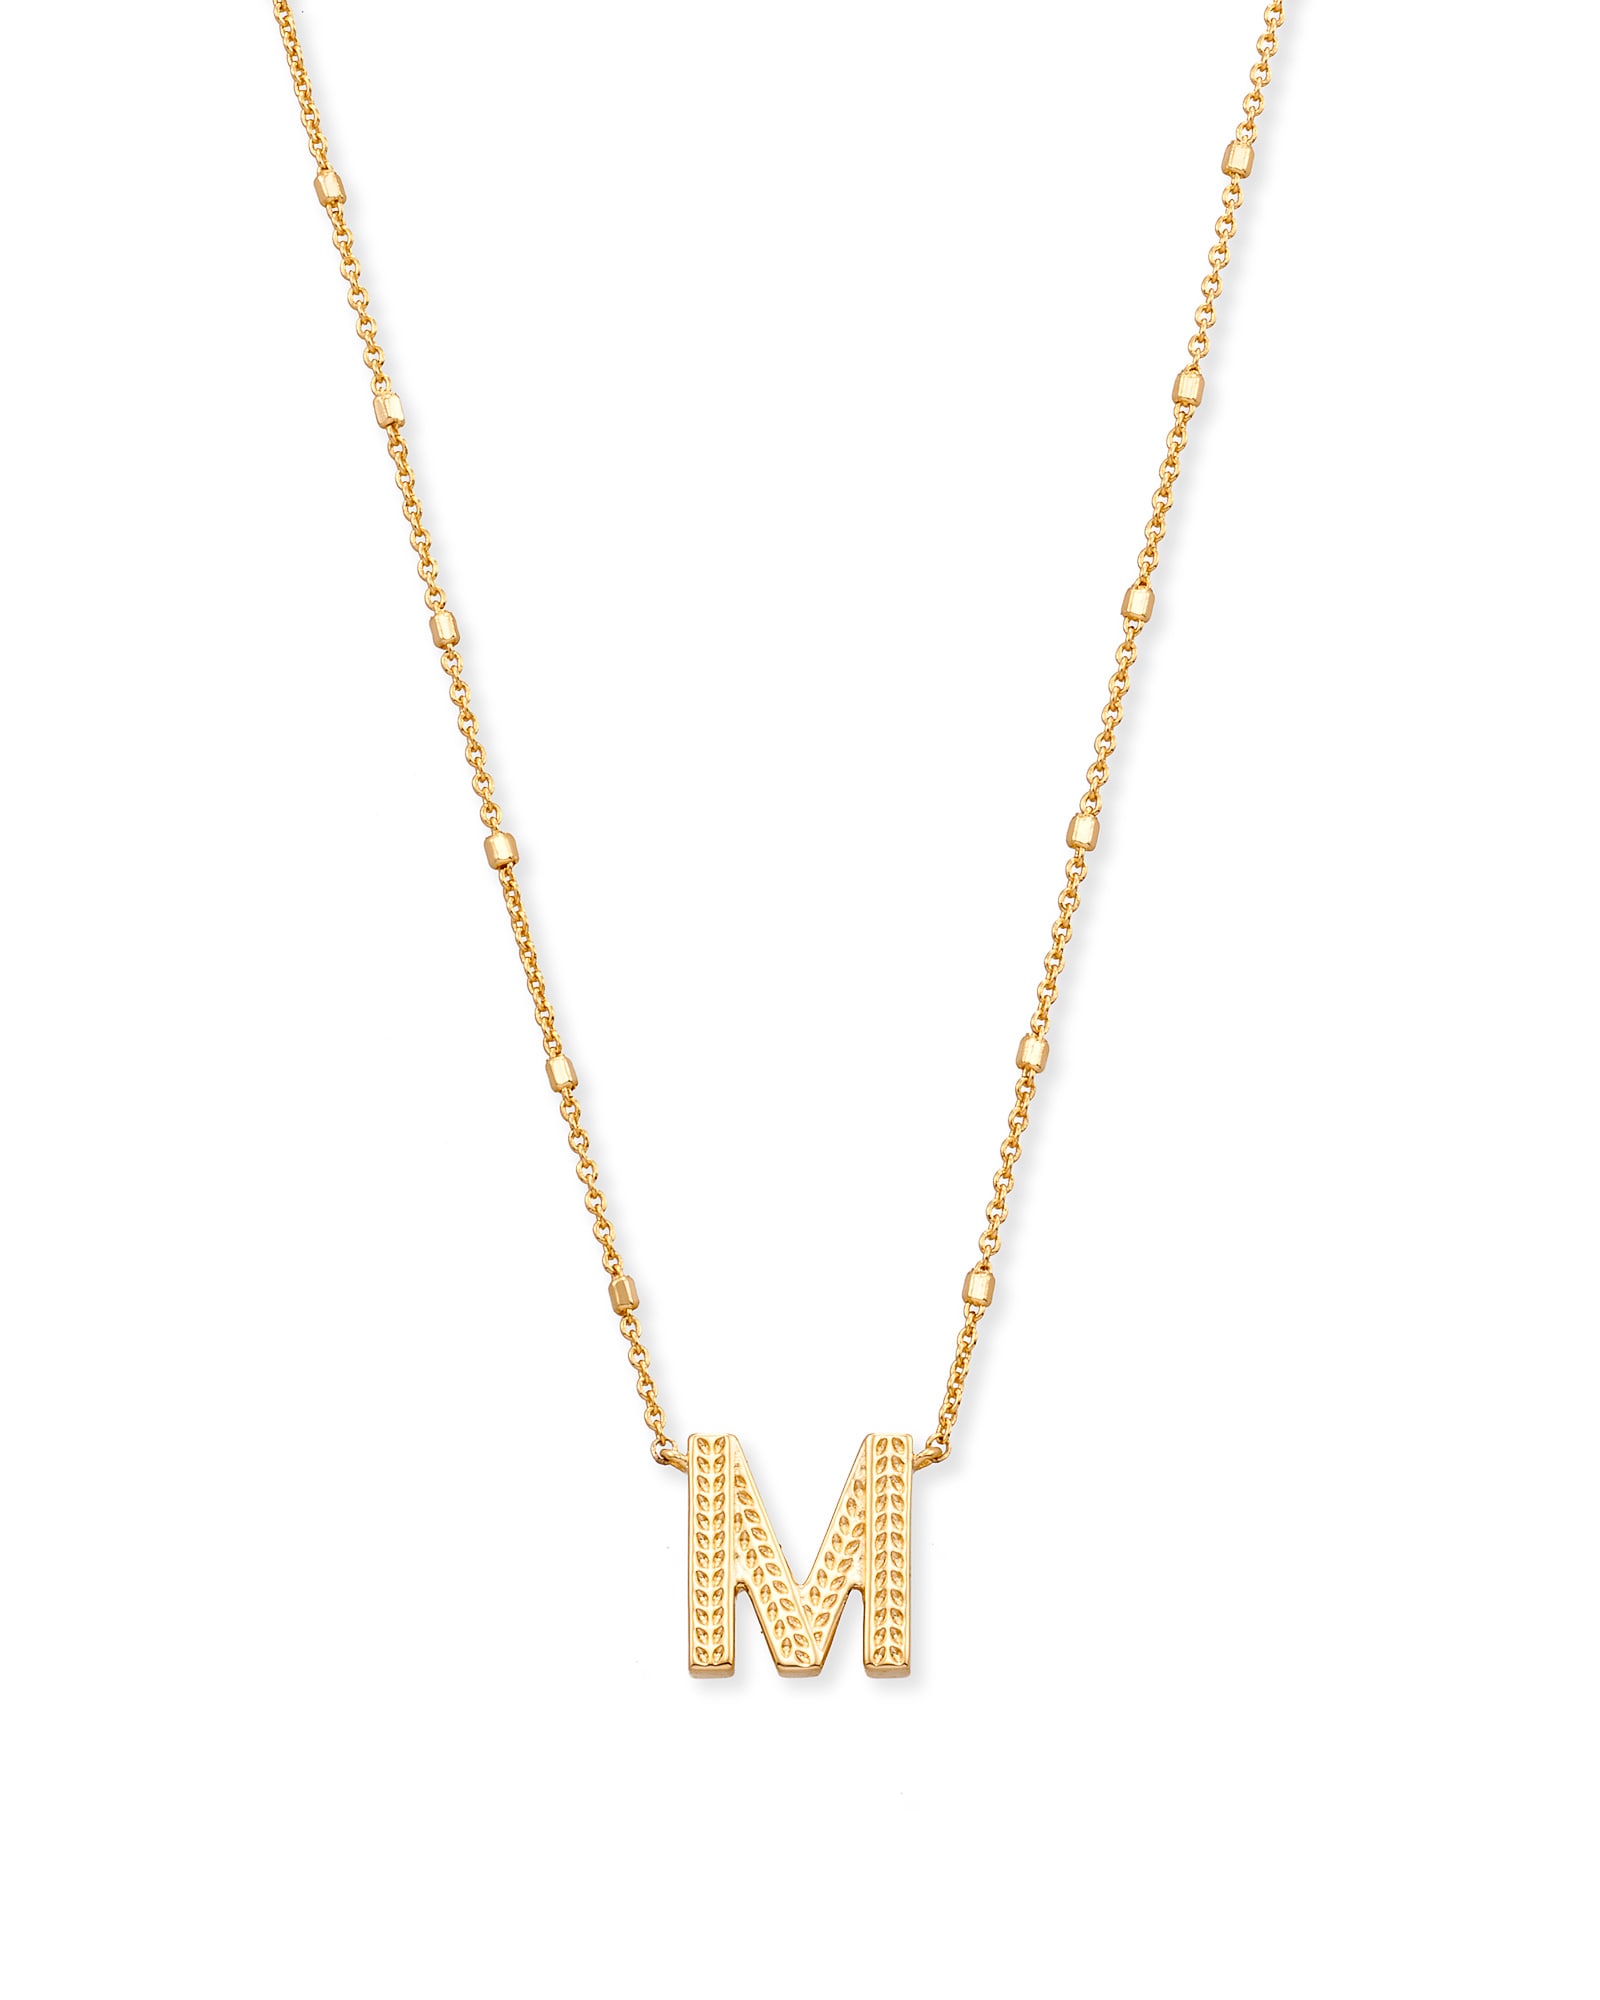 Necklace Letter M gold